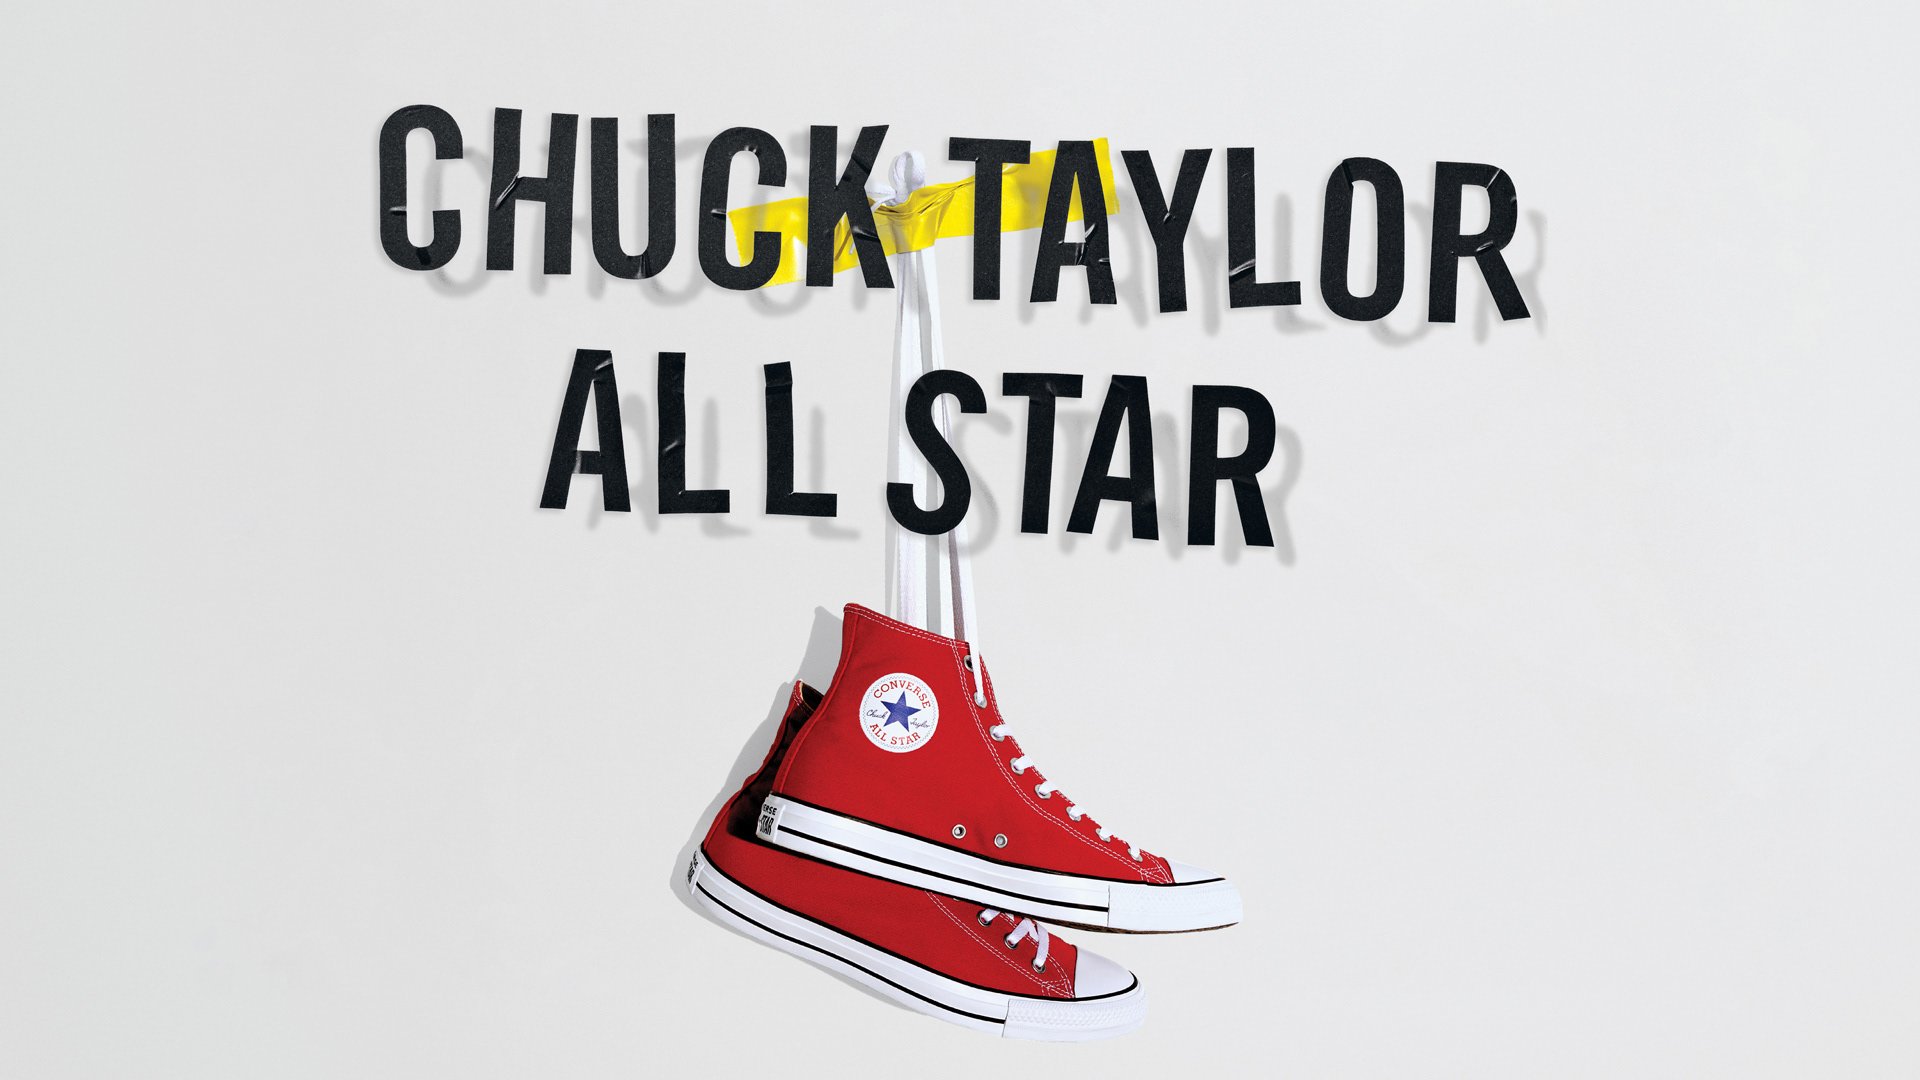 All Star Chuck Taylor